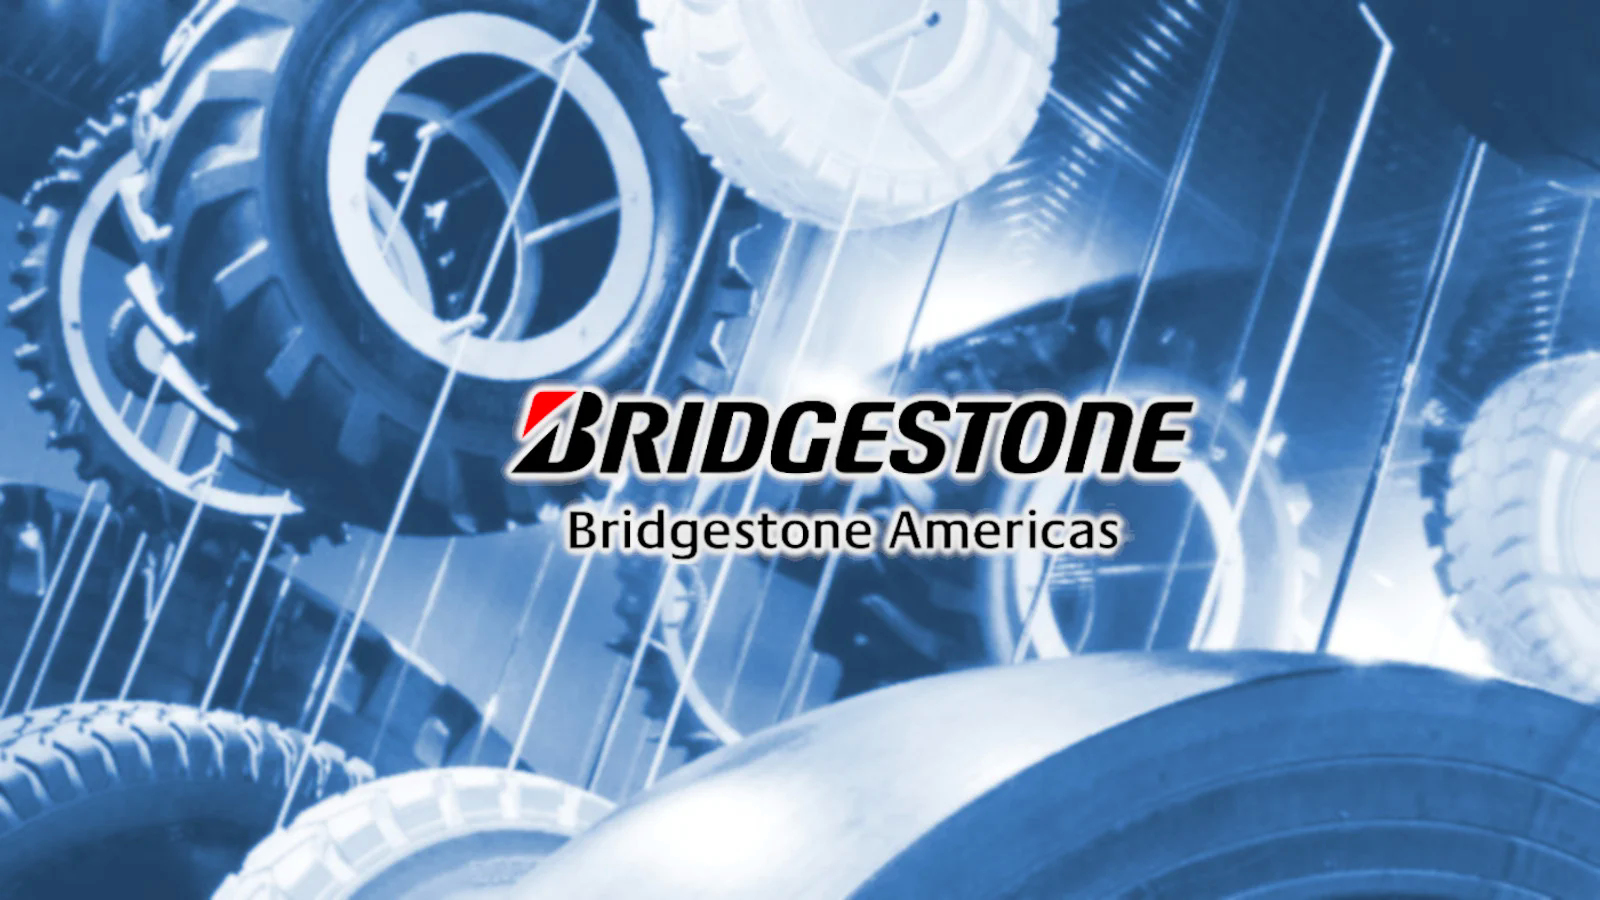 LockBit ransomware gang claims attack on Bridgestone Americas